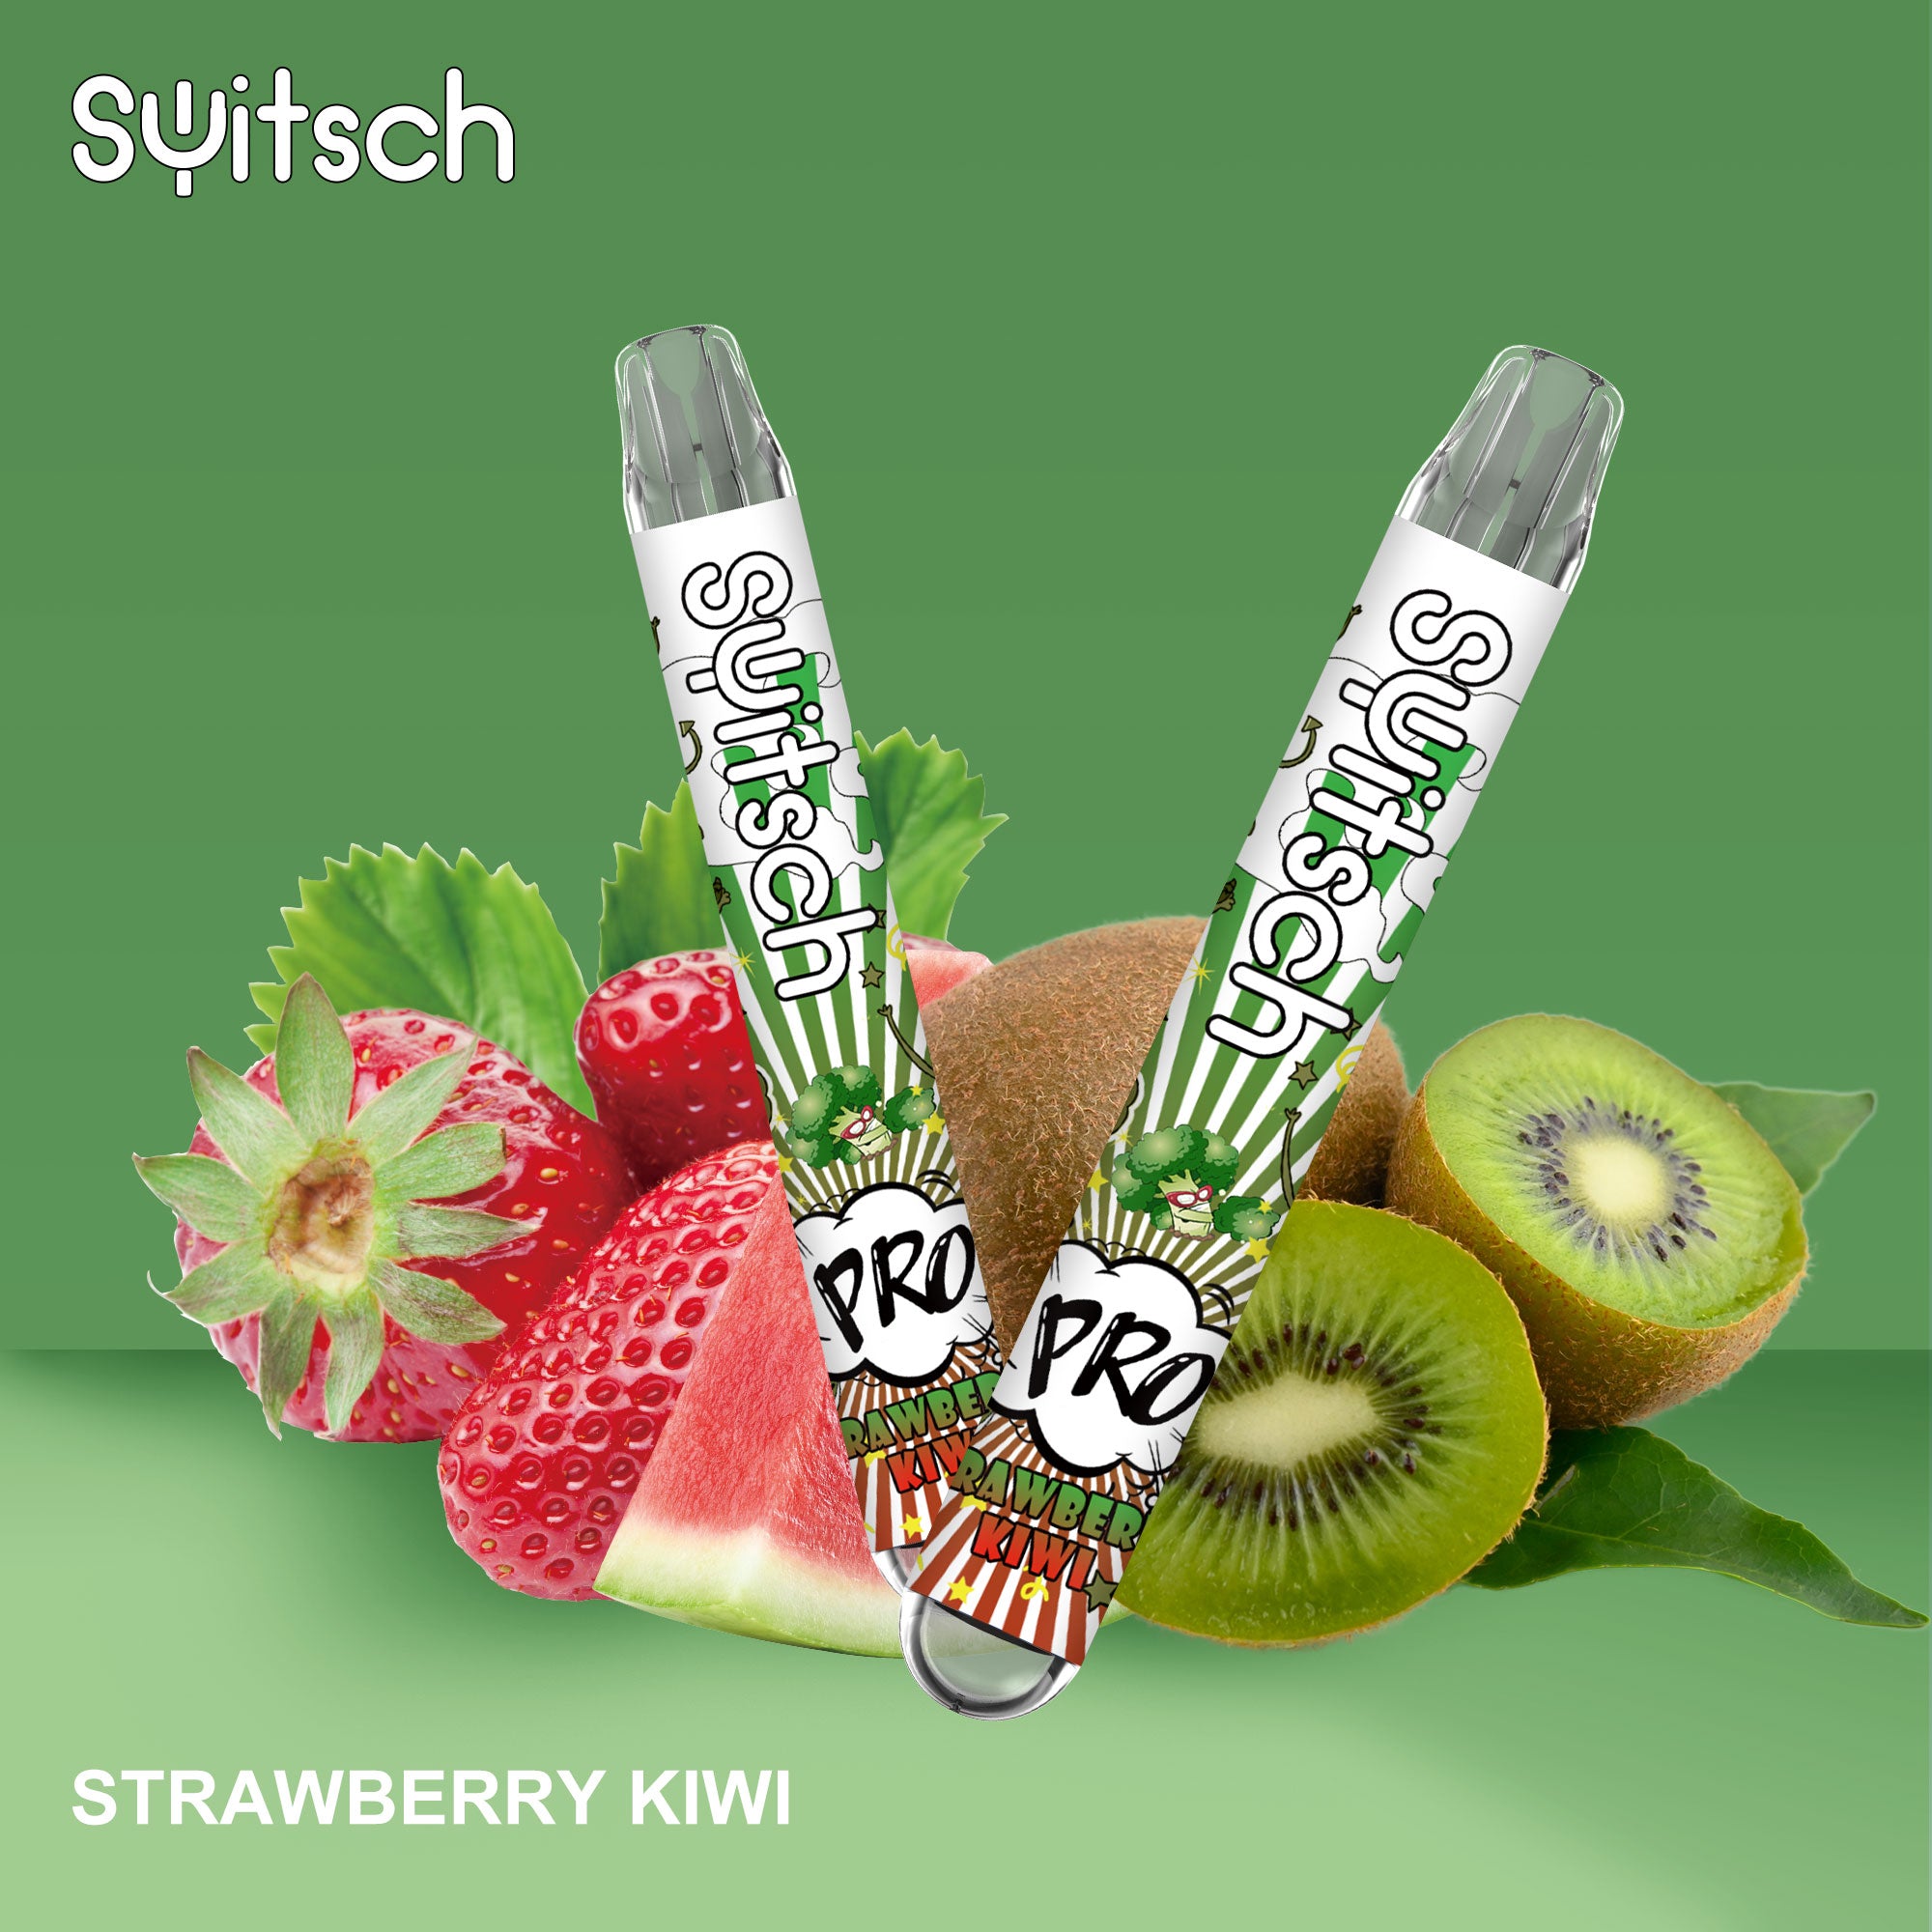 Erdbeer-Kiwi - Puff Pro 2%